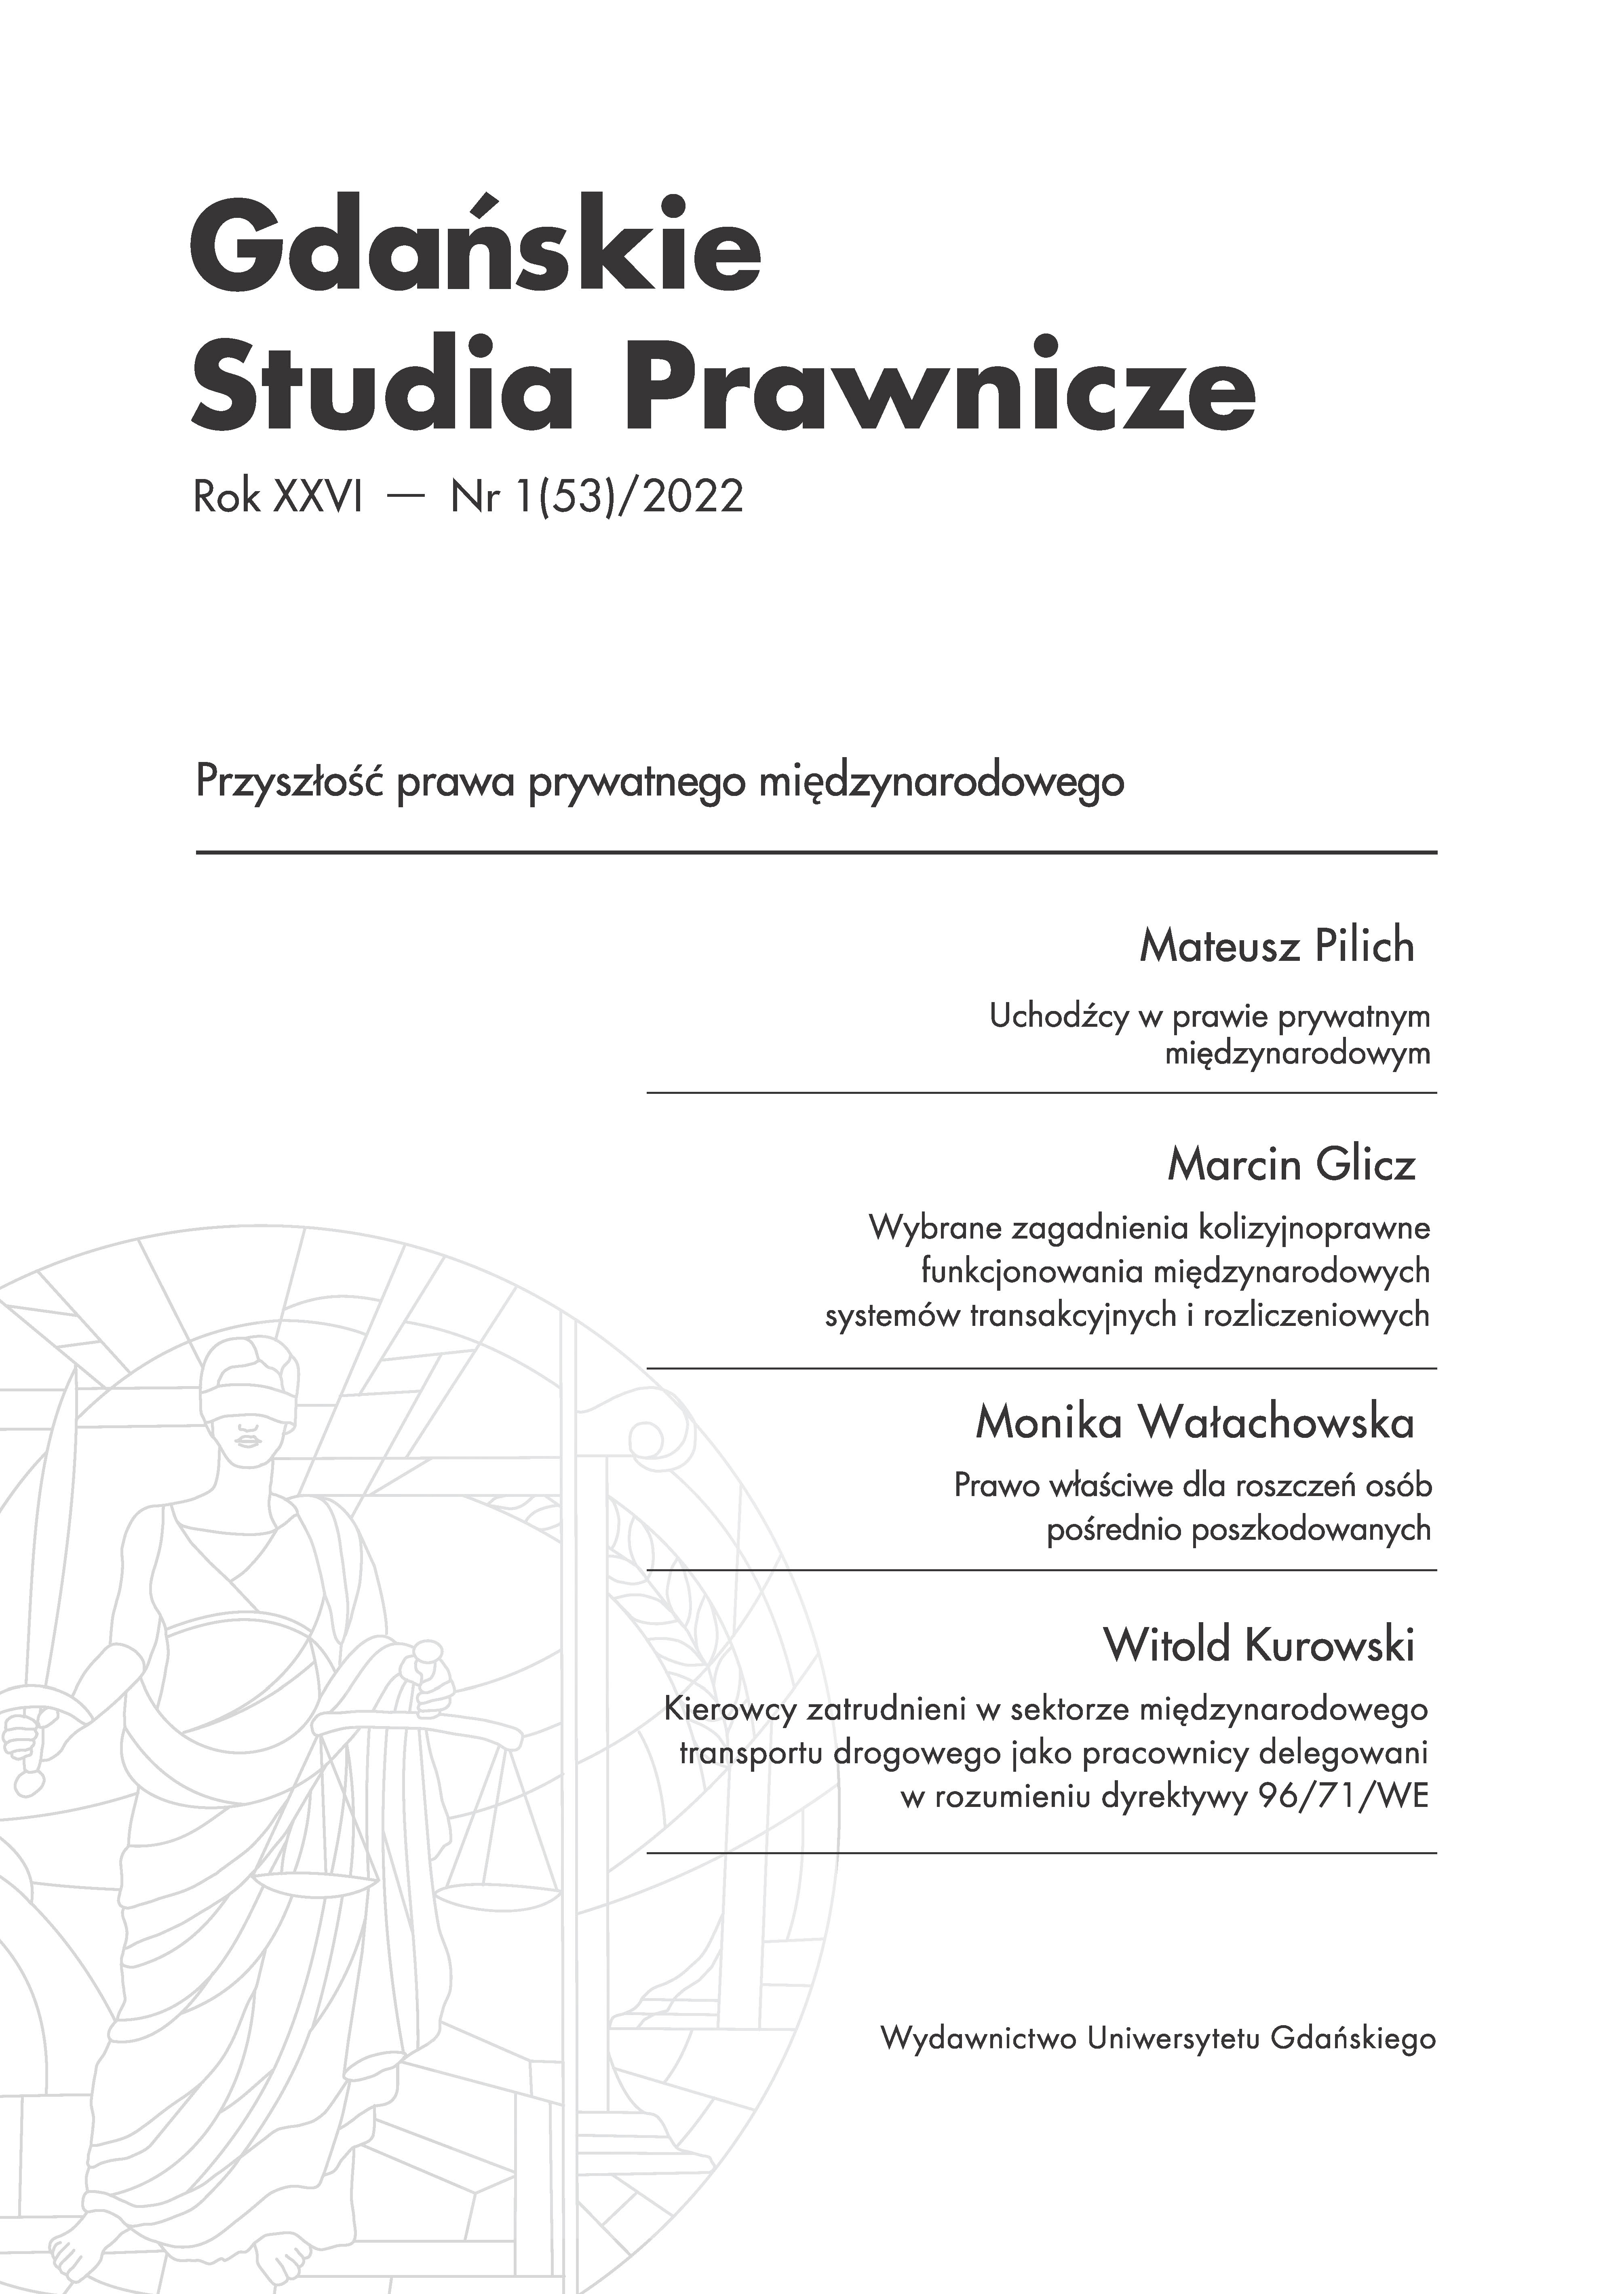 Arkadiusz Wowerka, Zakres zastosowania statutu personalnego spółki [Scope of application of the company’s personnel statute], Warsaw 2019, pp. 392 (review) Cover Image